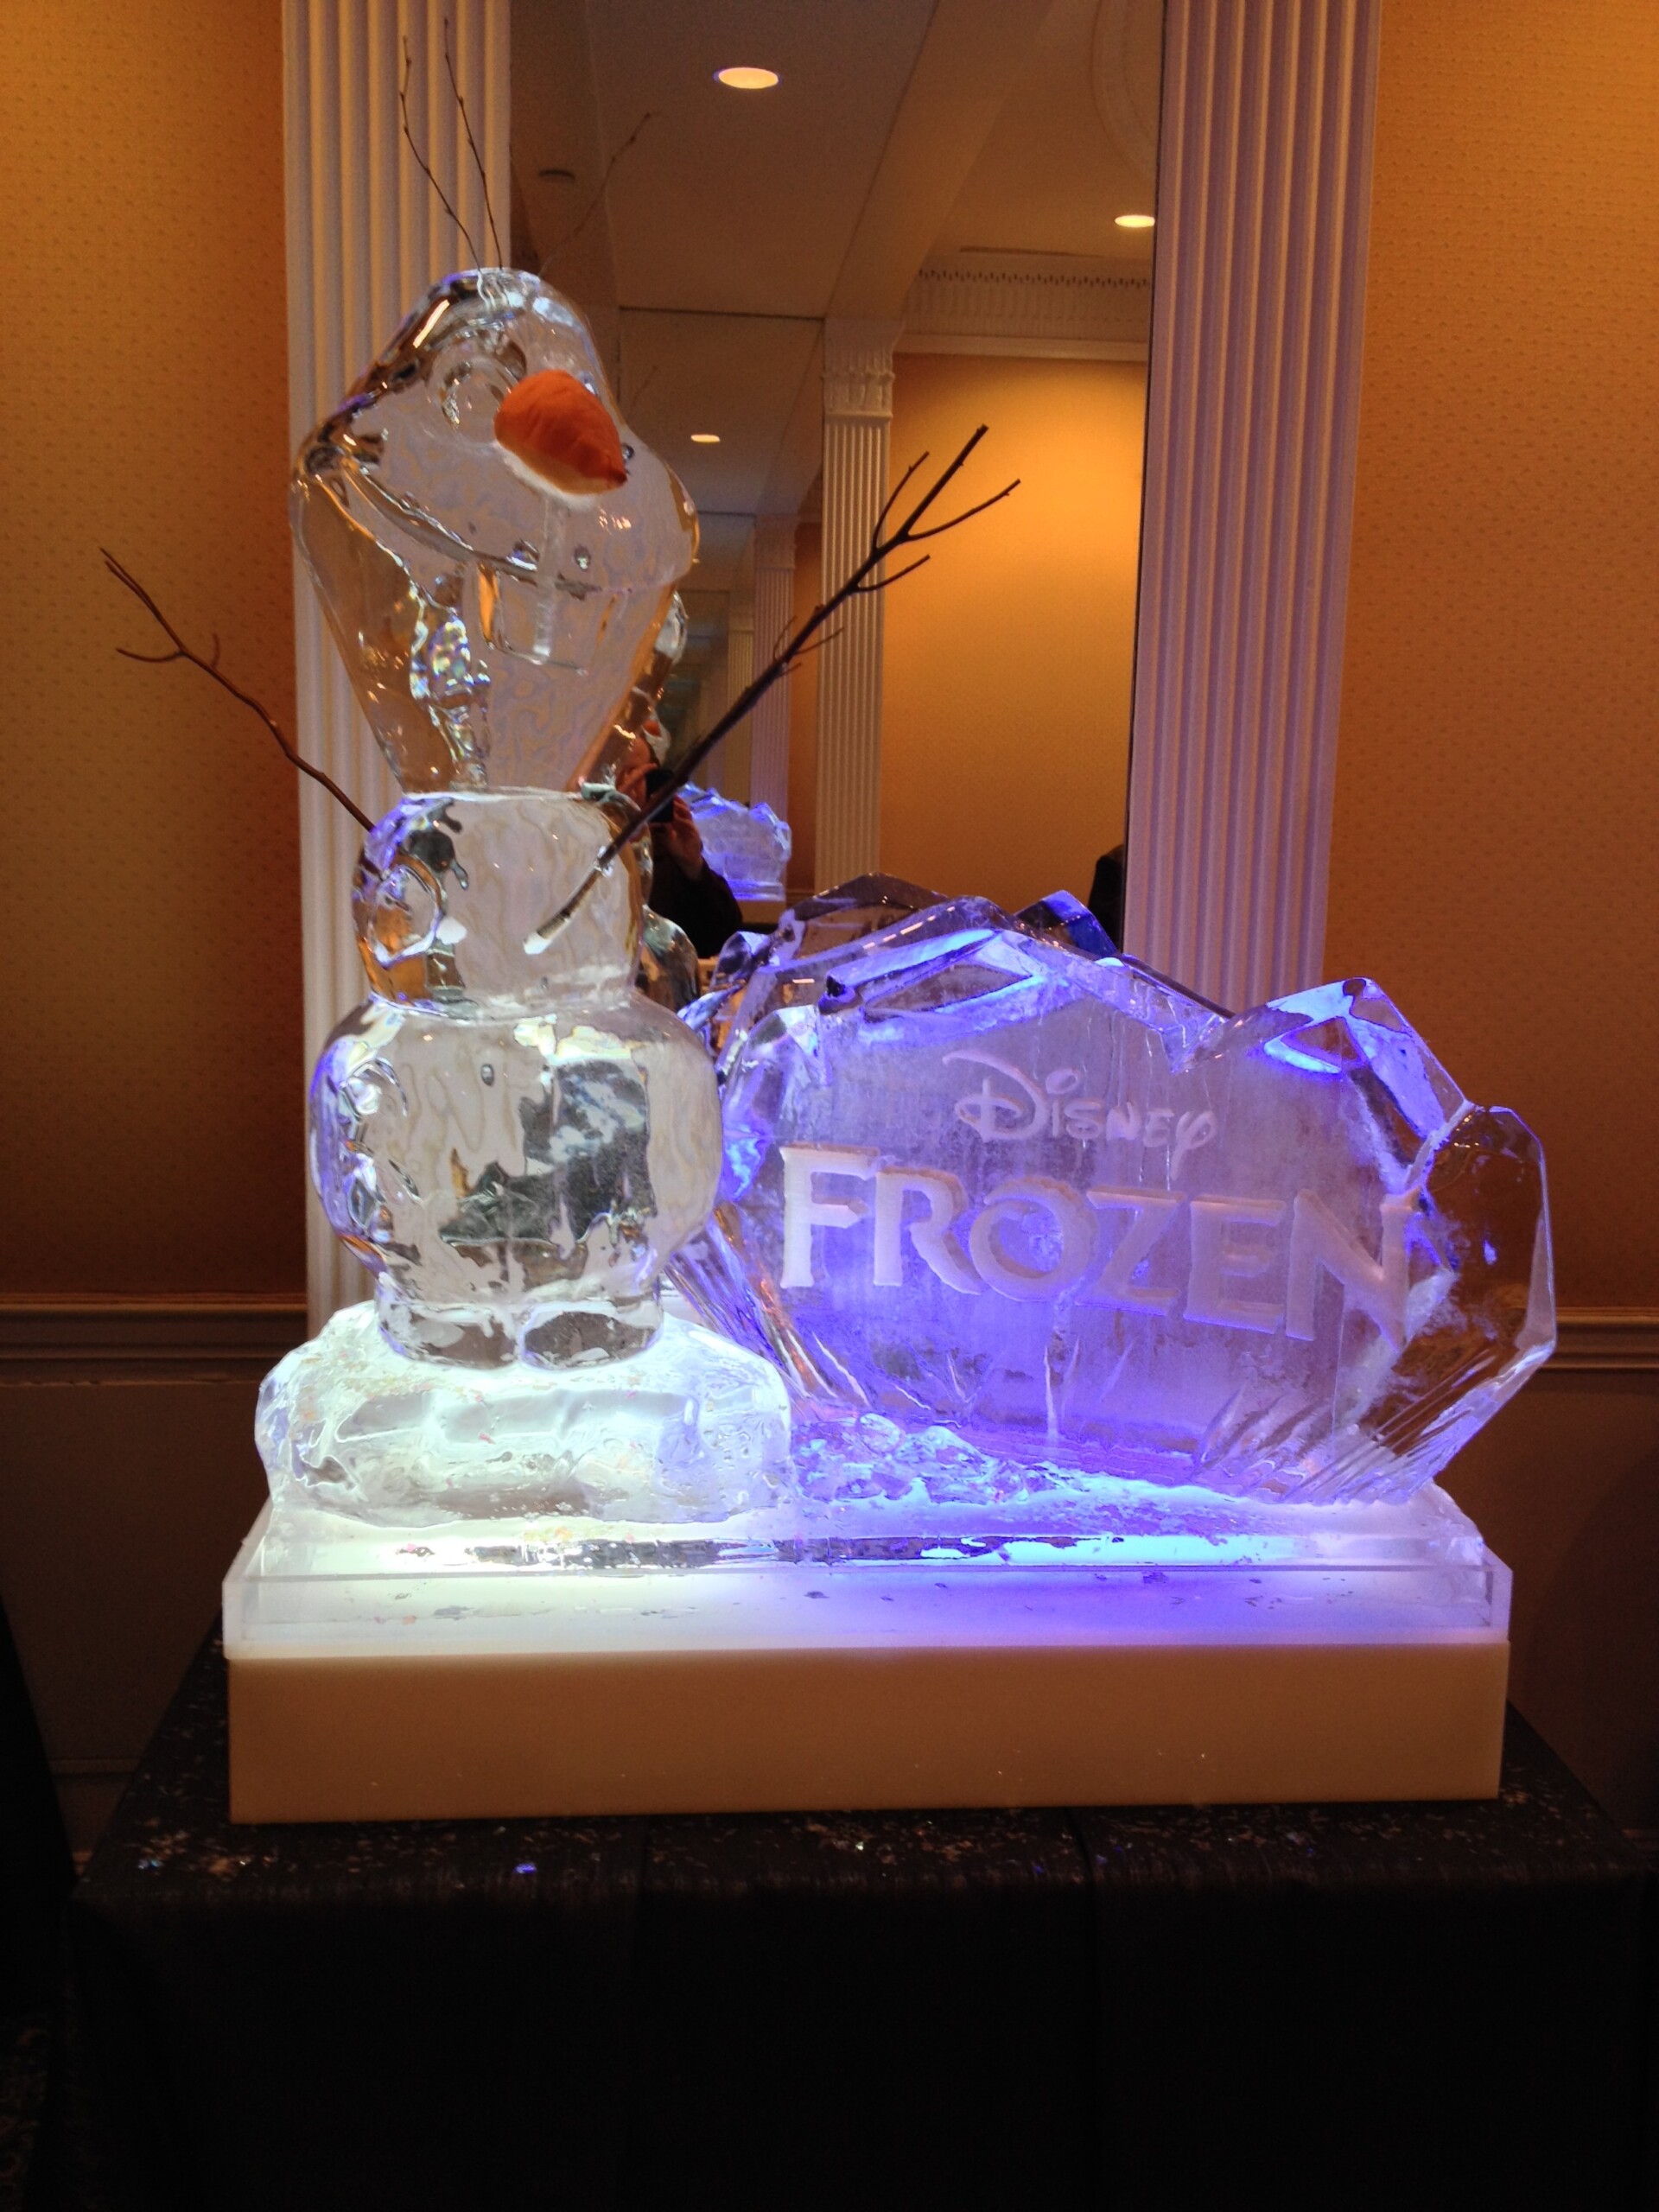 Frozen Ice Sculpture Olaf